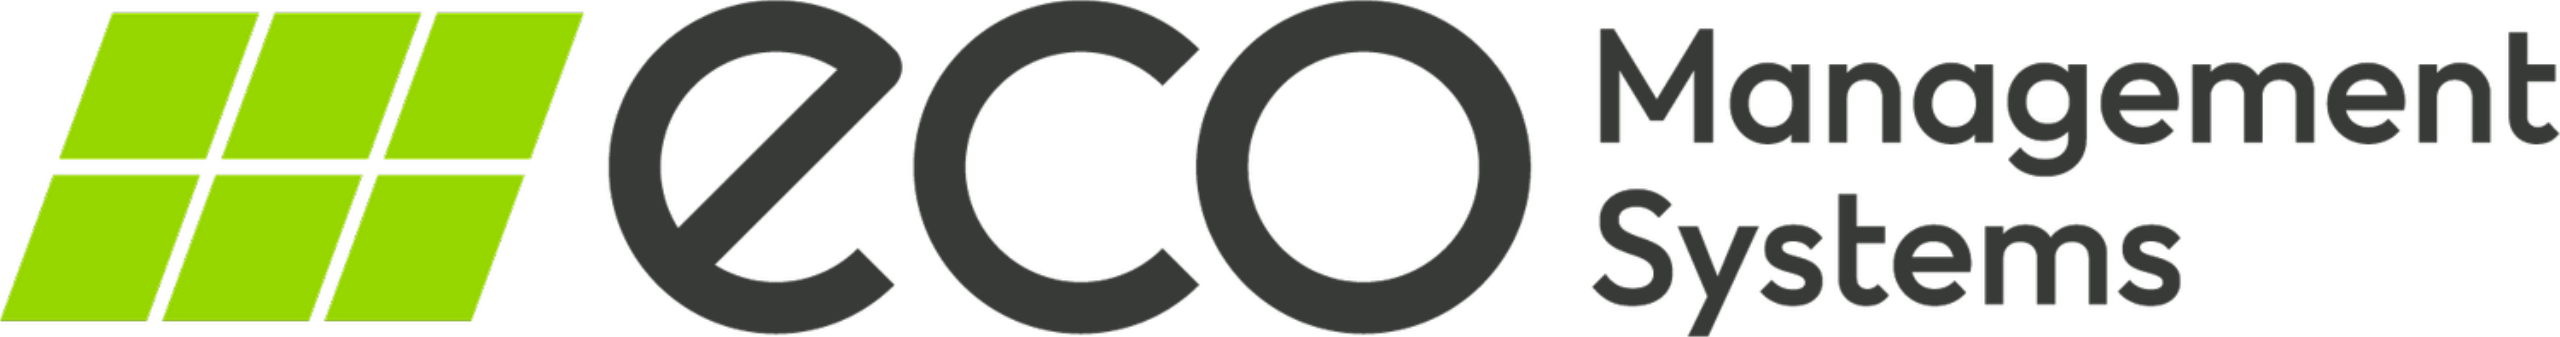 Eco Management Systems Logo